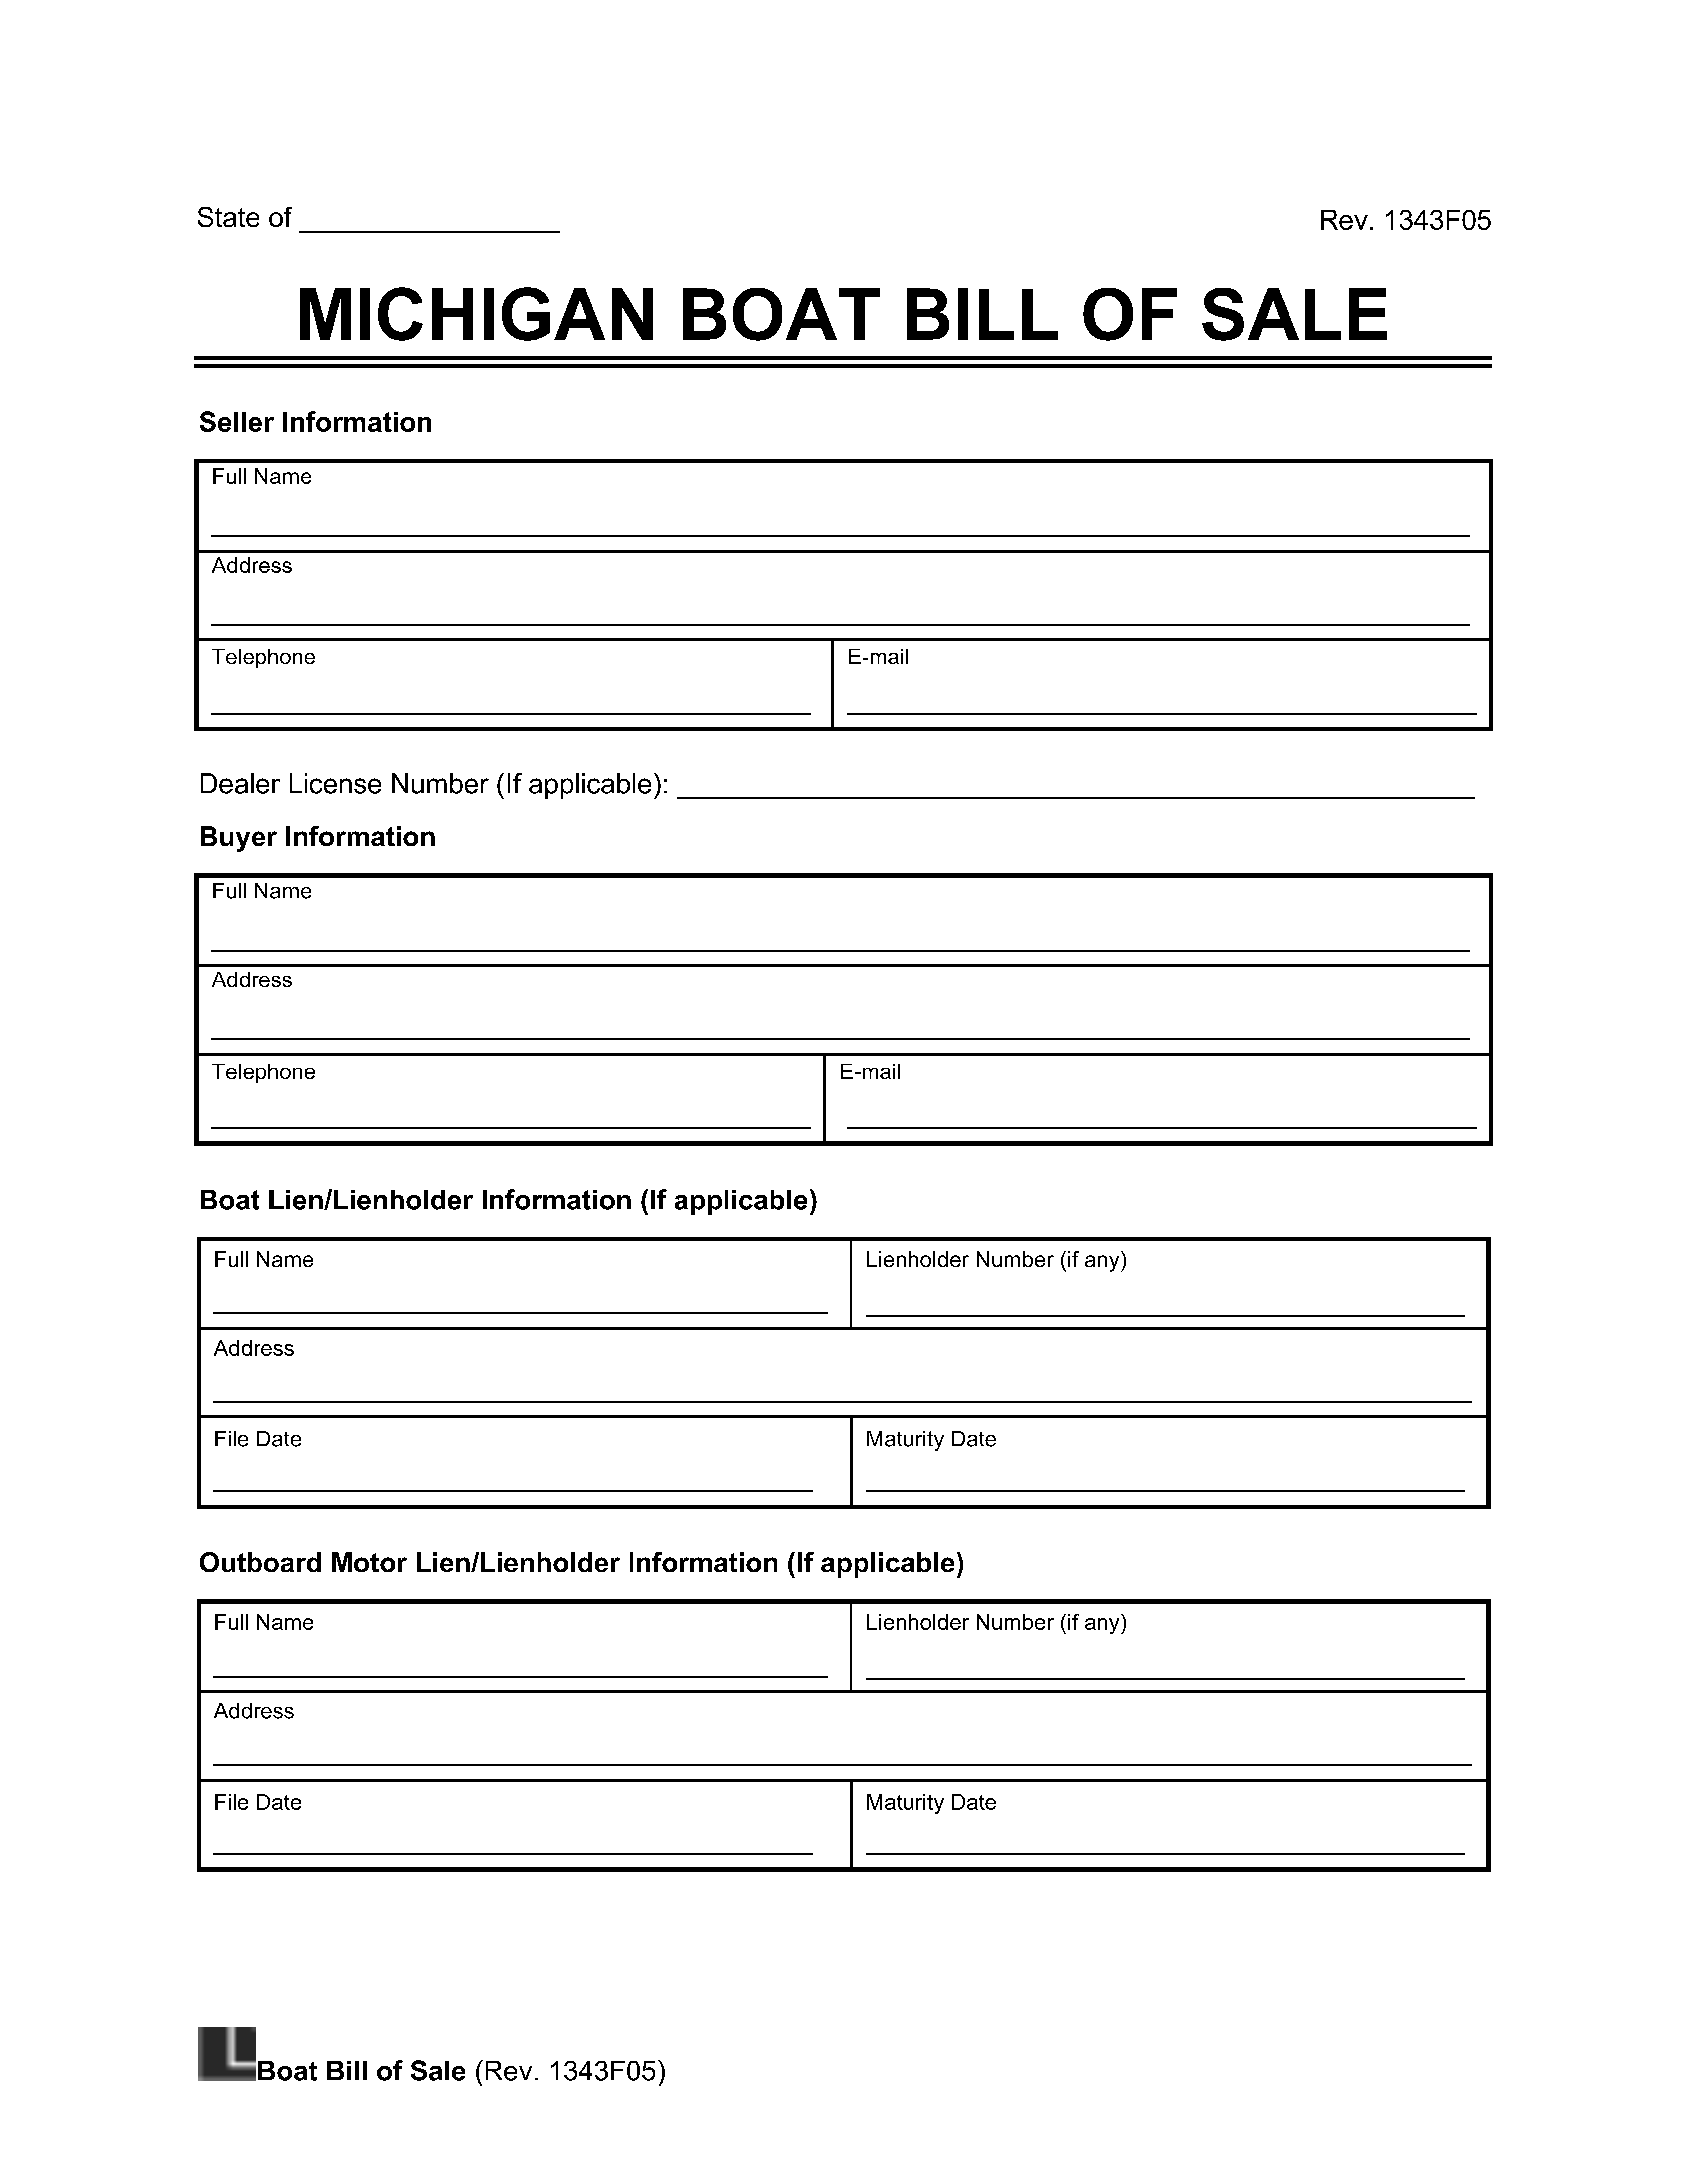 Michigan Boat Bill of Sale screenshot